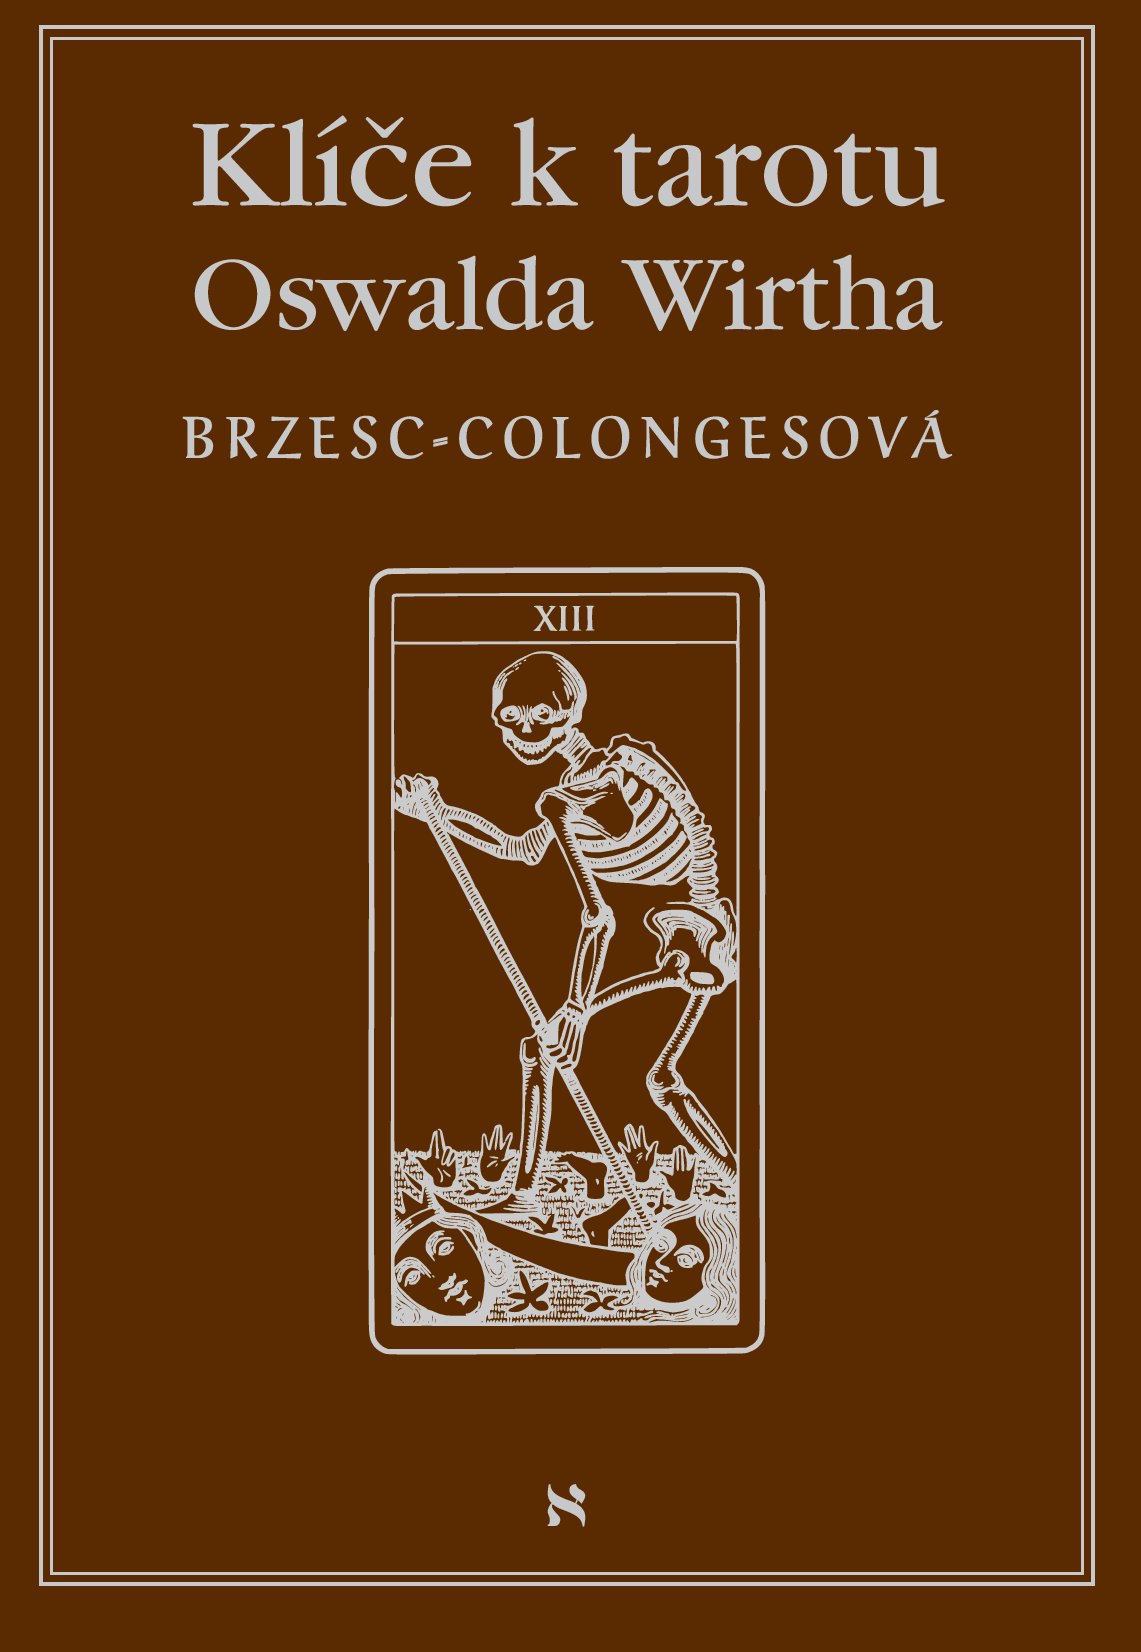 Klíče k tarotu Oswalda Wirtha